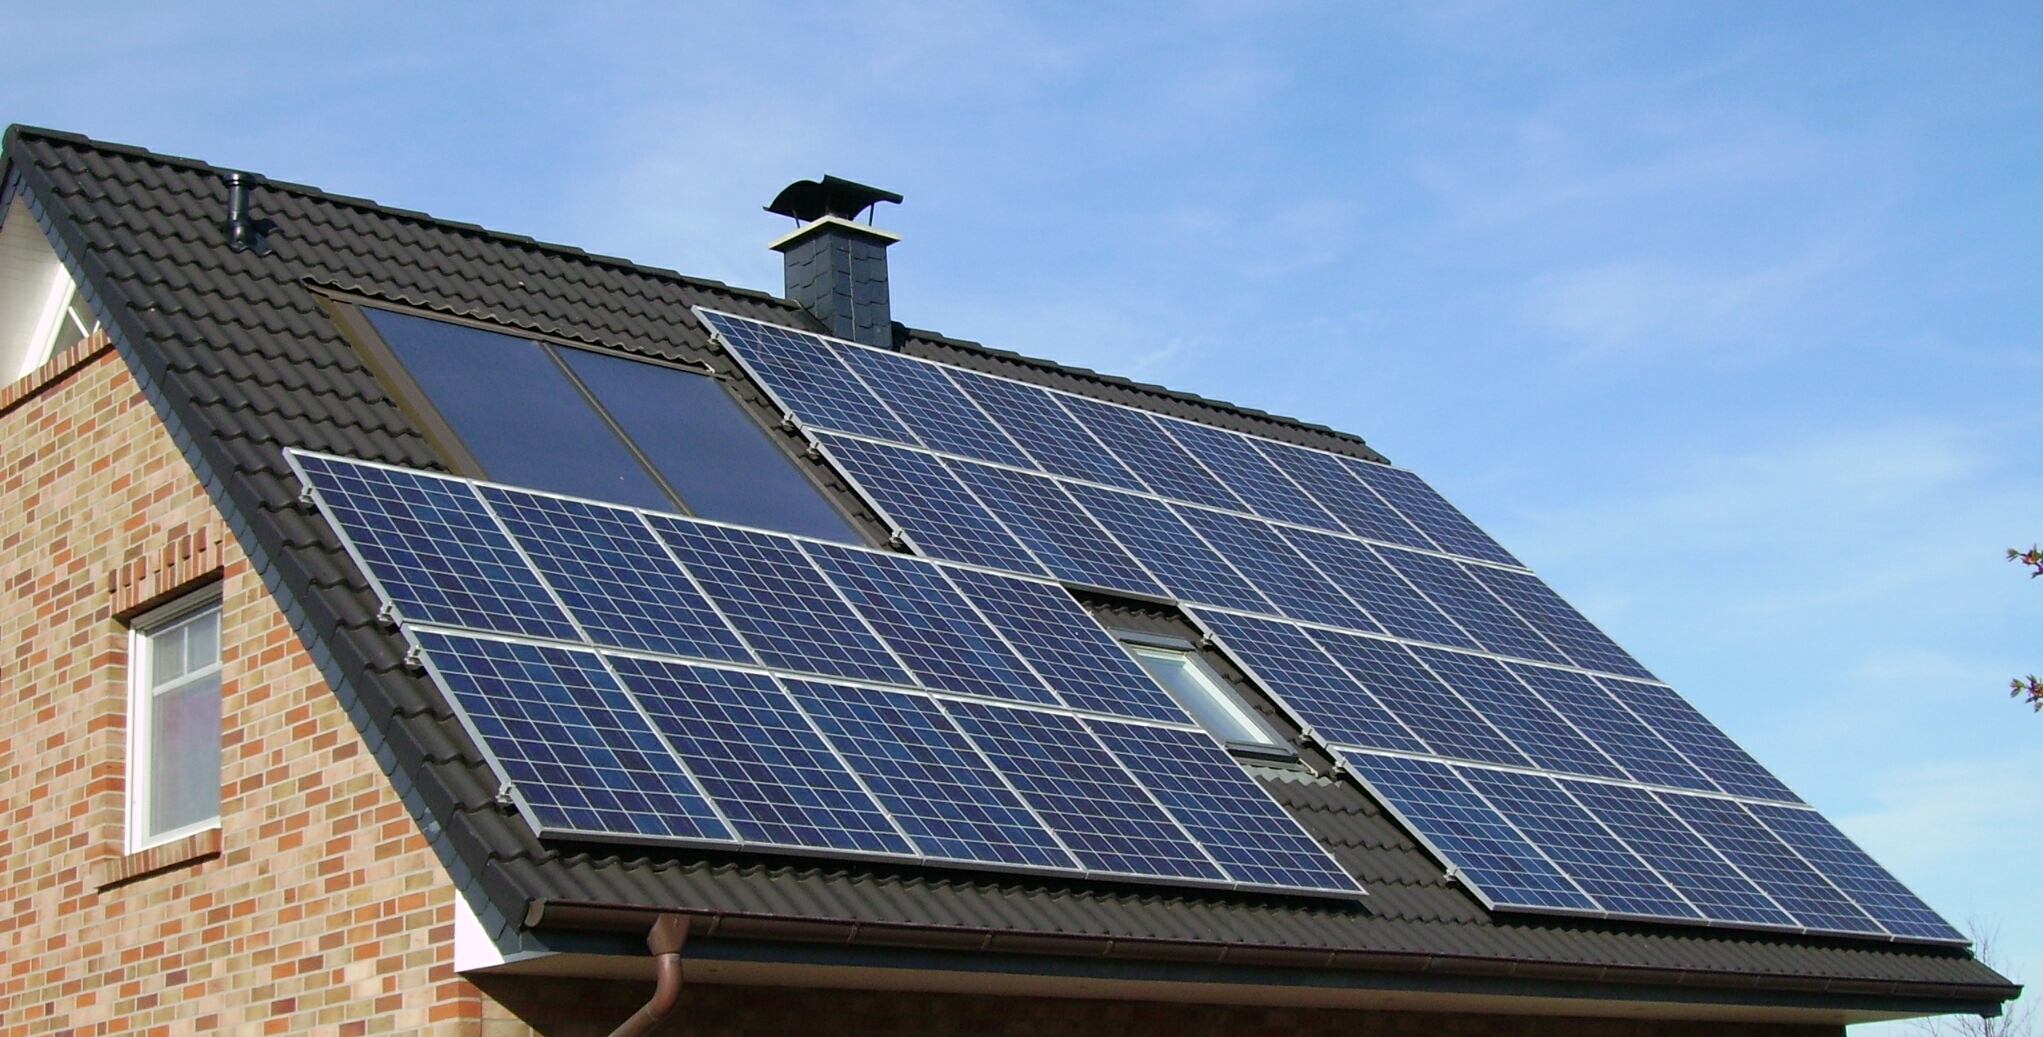 Solar_panels_on_a_roof.jpg